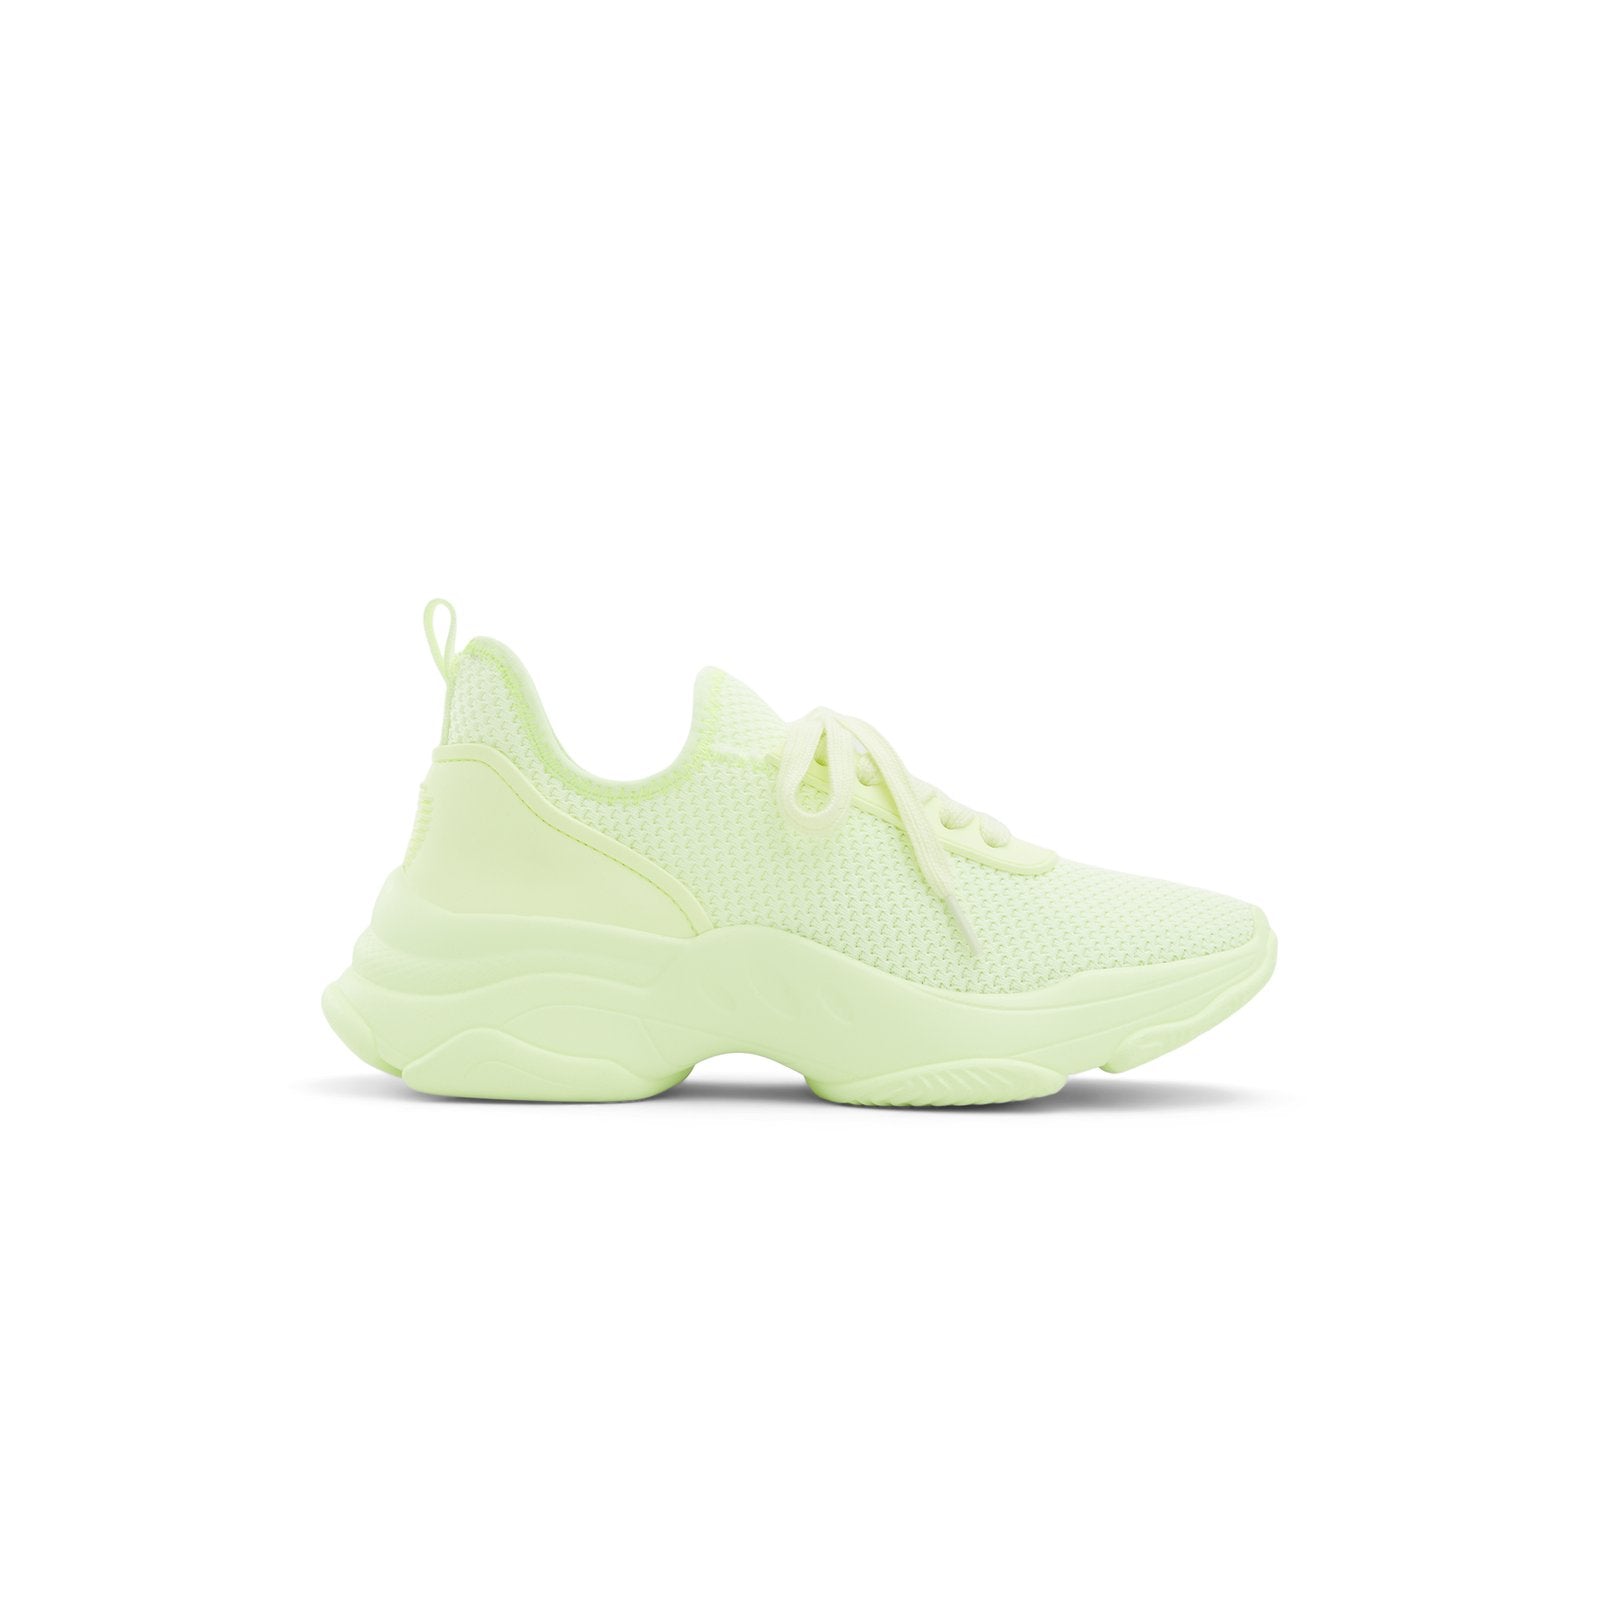 Lexxii / Sneakers Women Shoes - Bright Green - CALL IT SPRING KSA